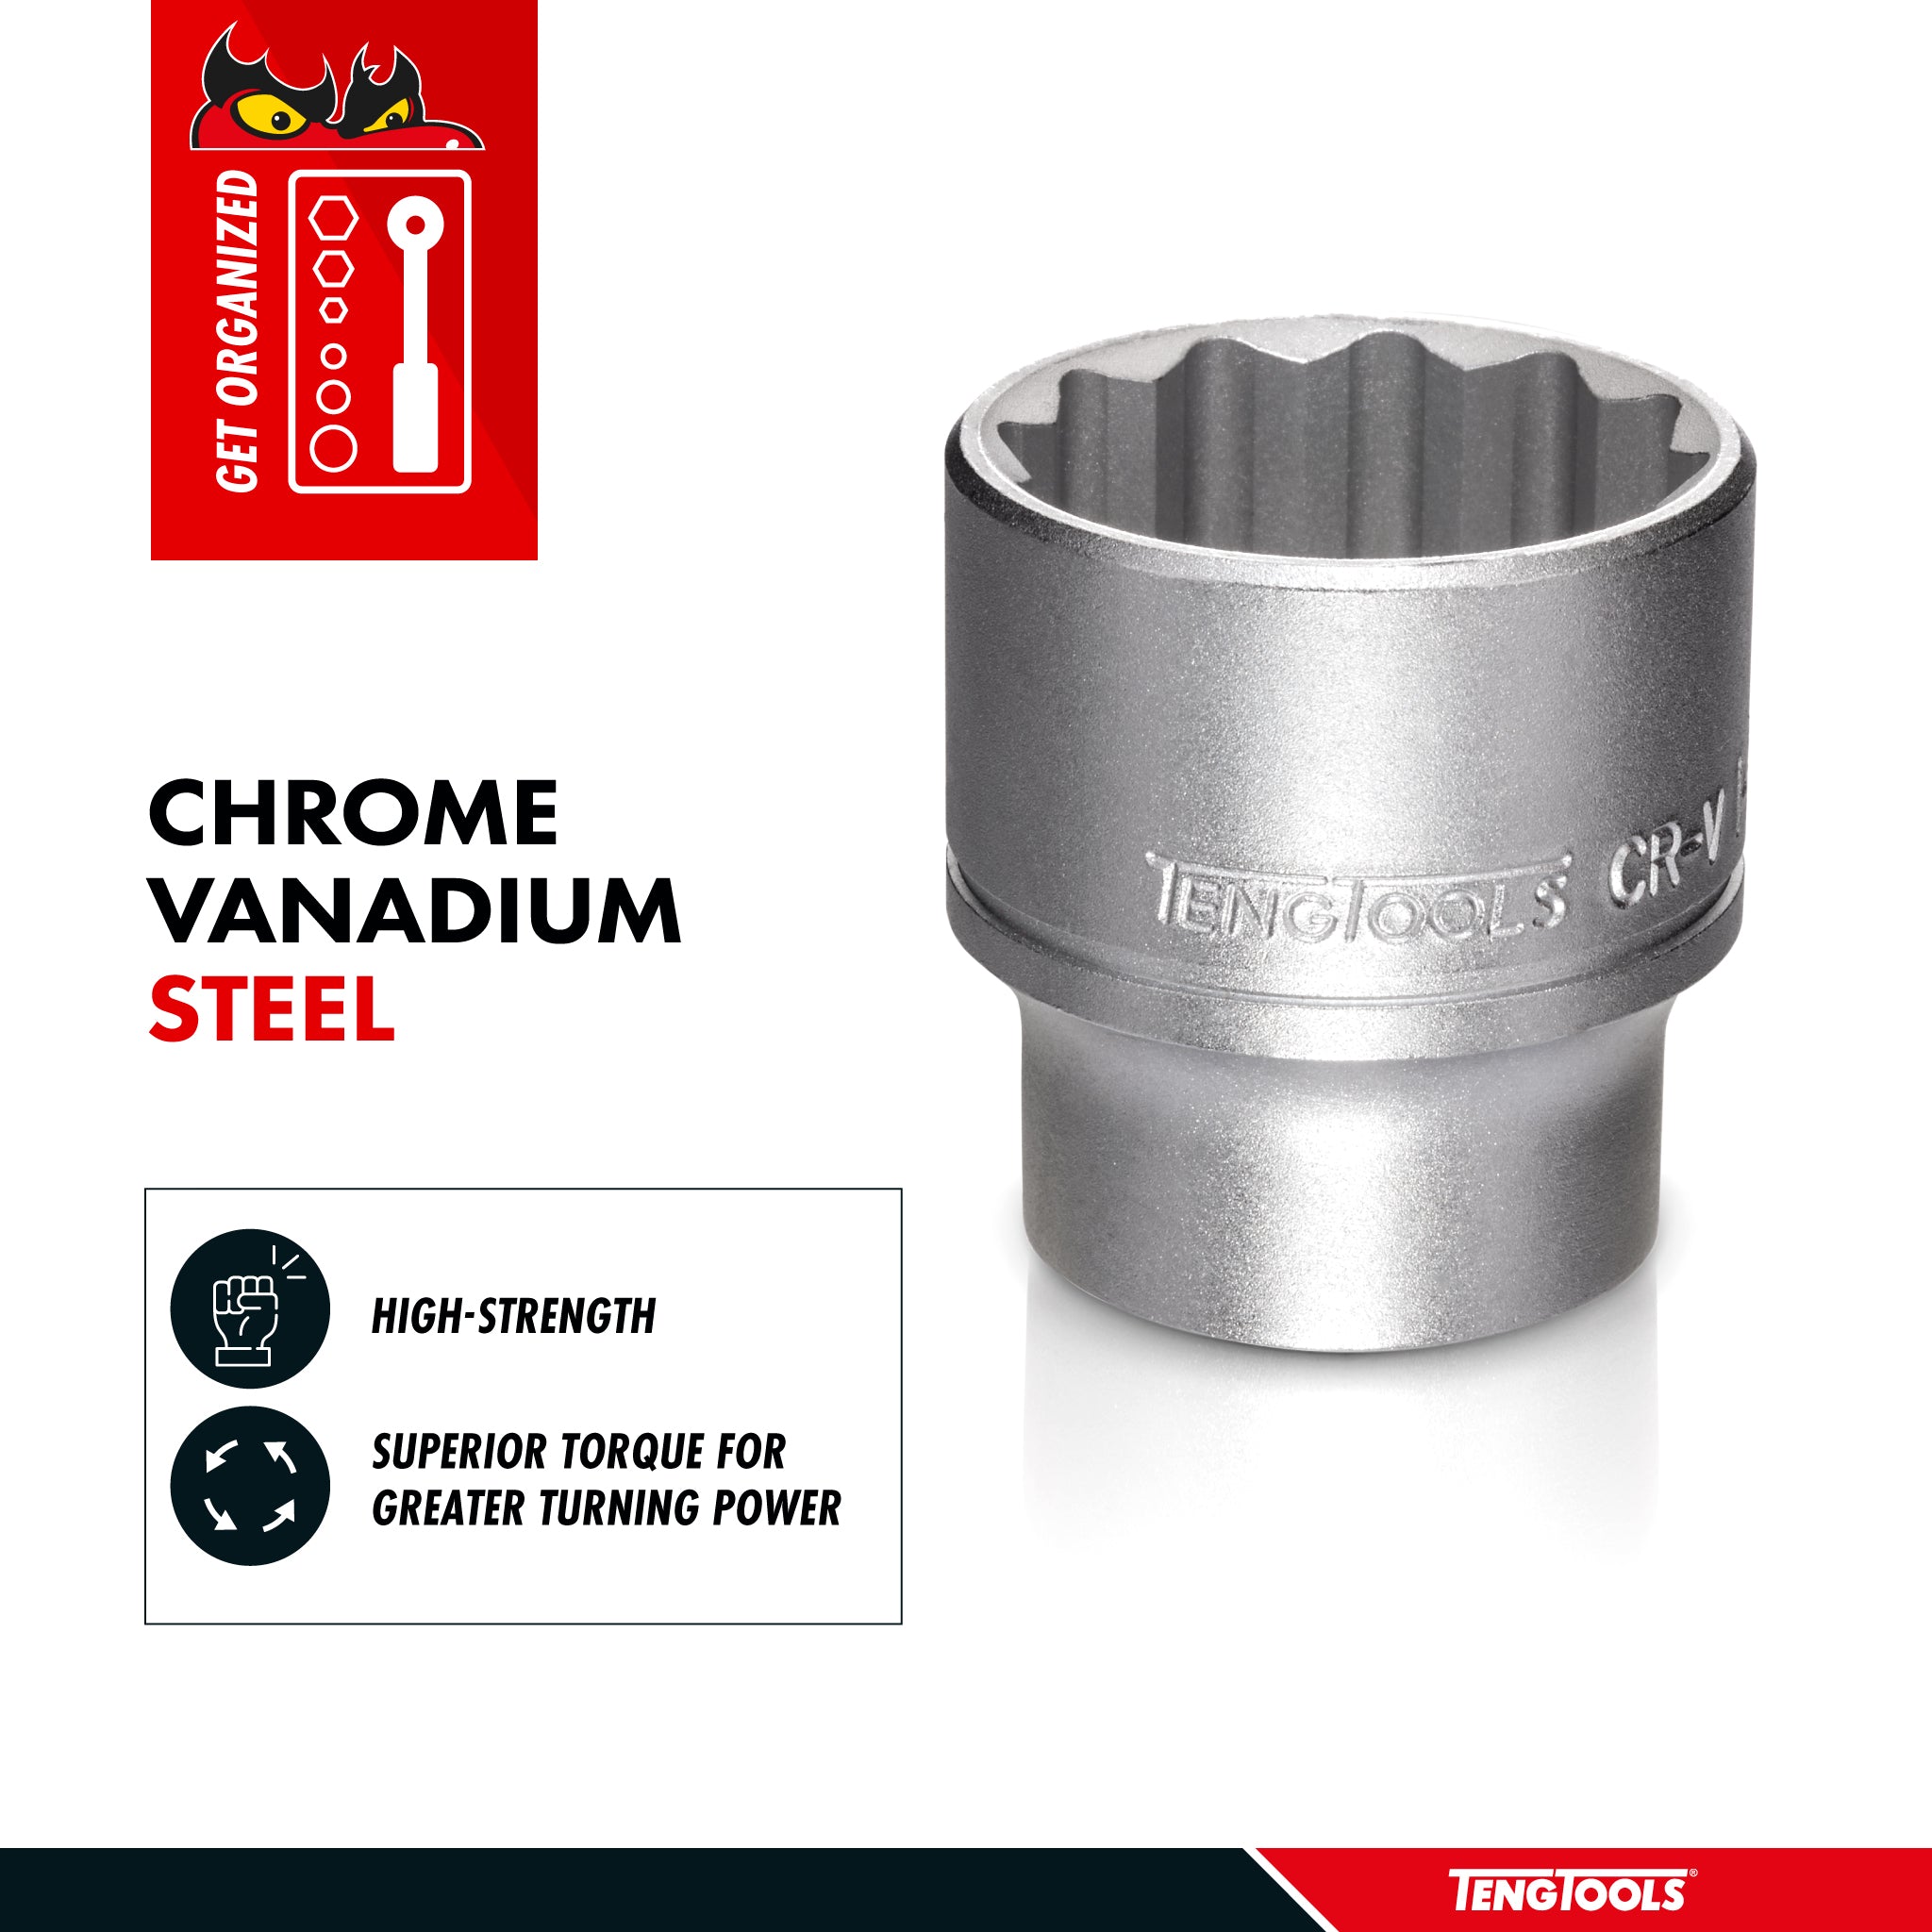 Teng Tools 1/2 Inch Drive 12 Point Metric Shallow Chrome Vanadium Sockets - 10mm